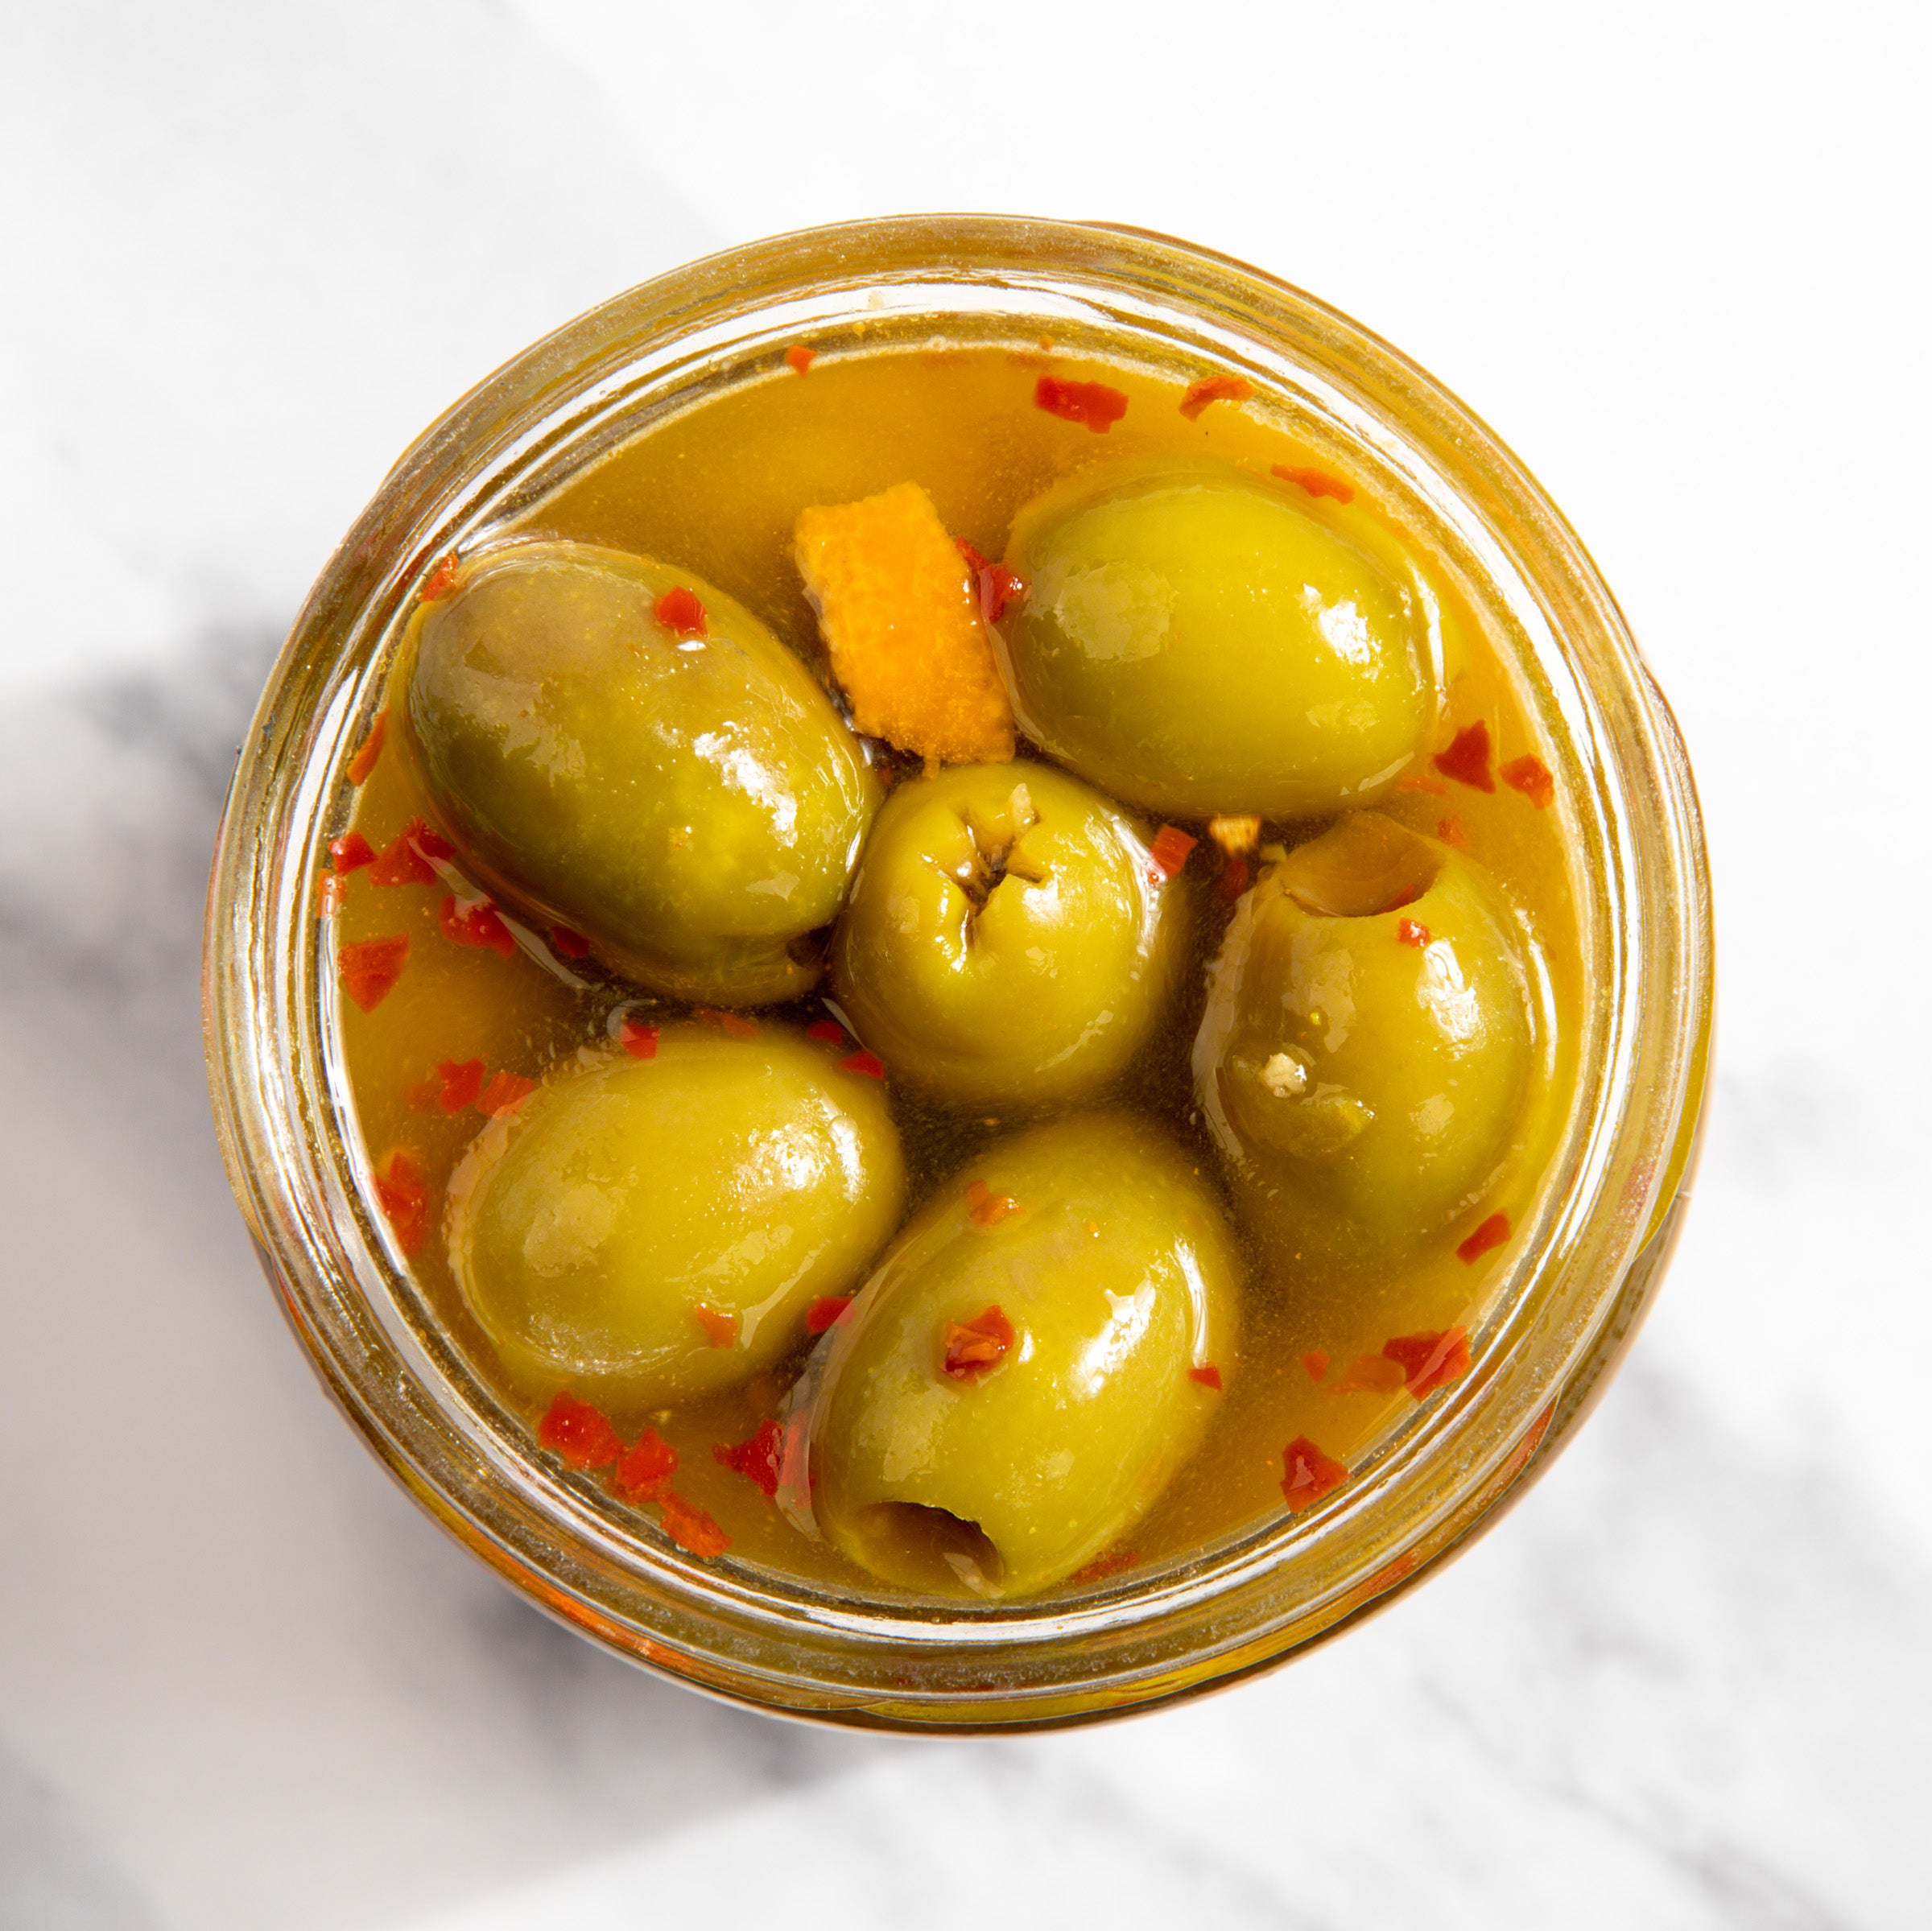 igourmet_15479_Tangerine and Chili Greek Olives_Divina_Olives & Antipasti